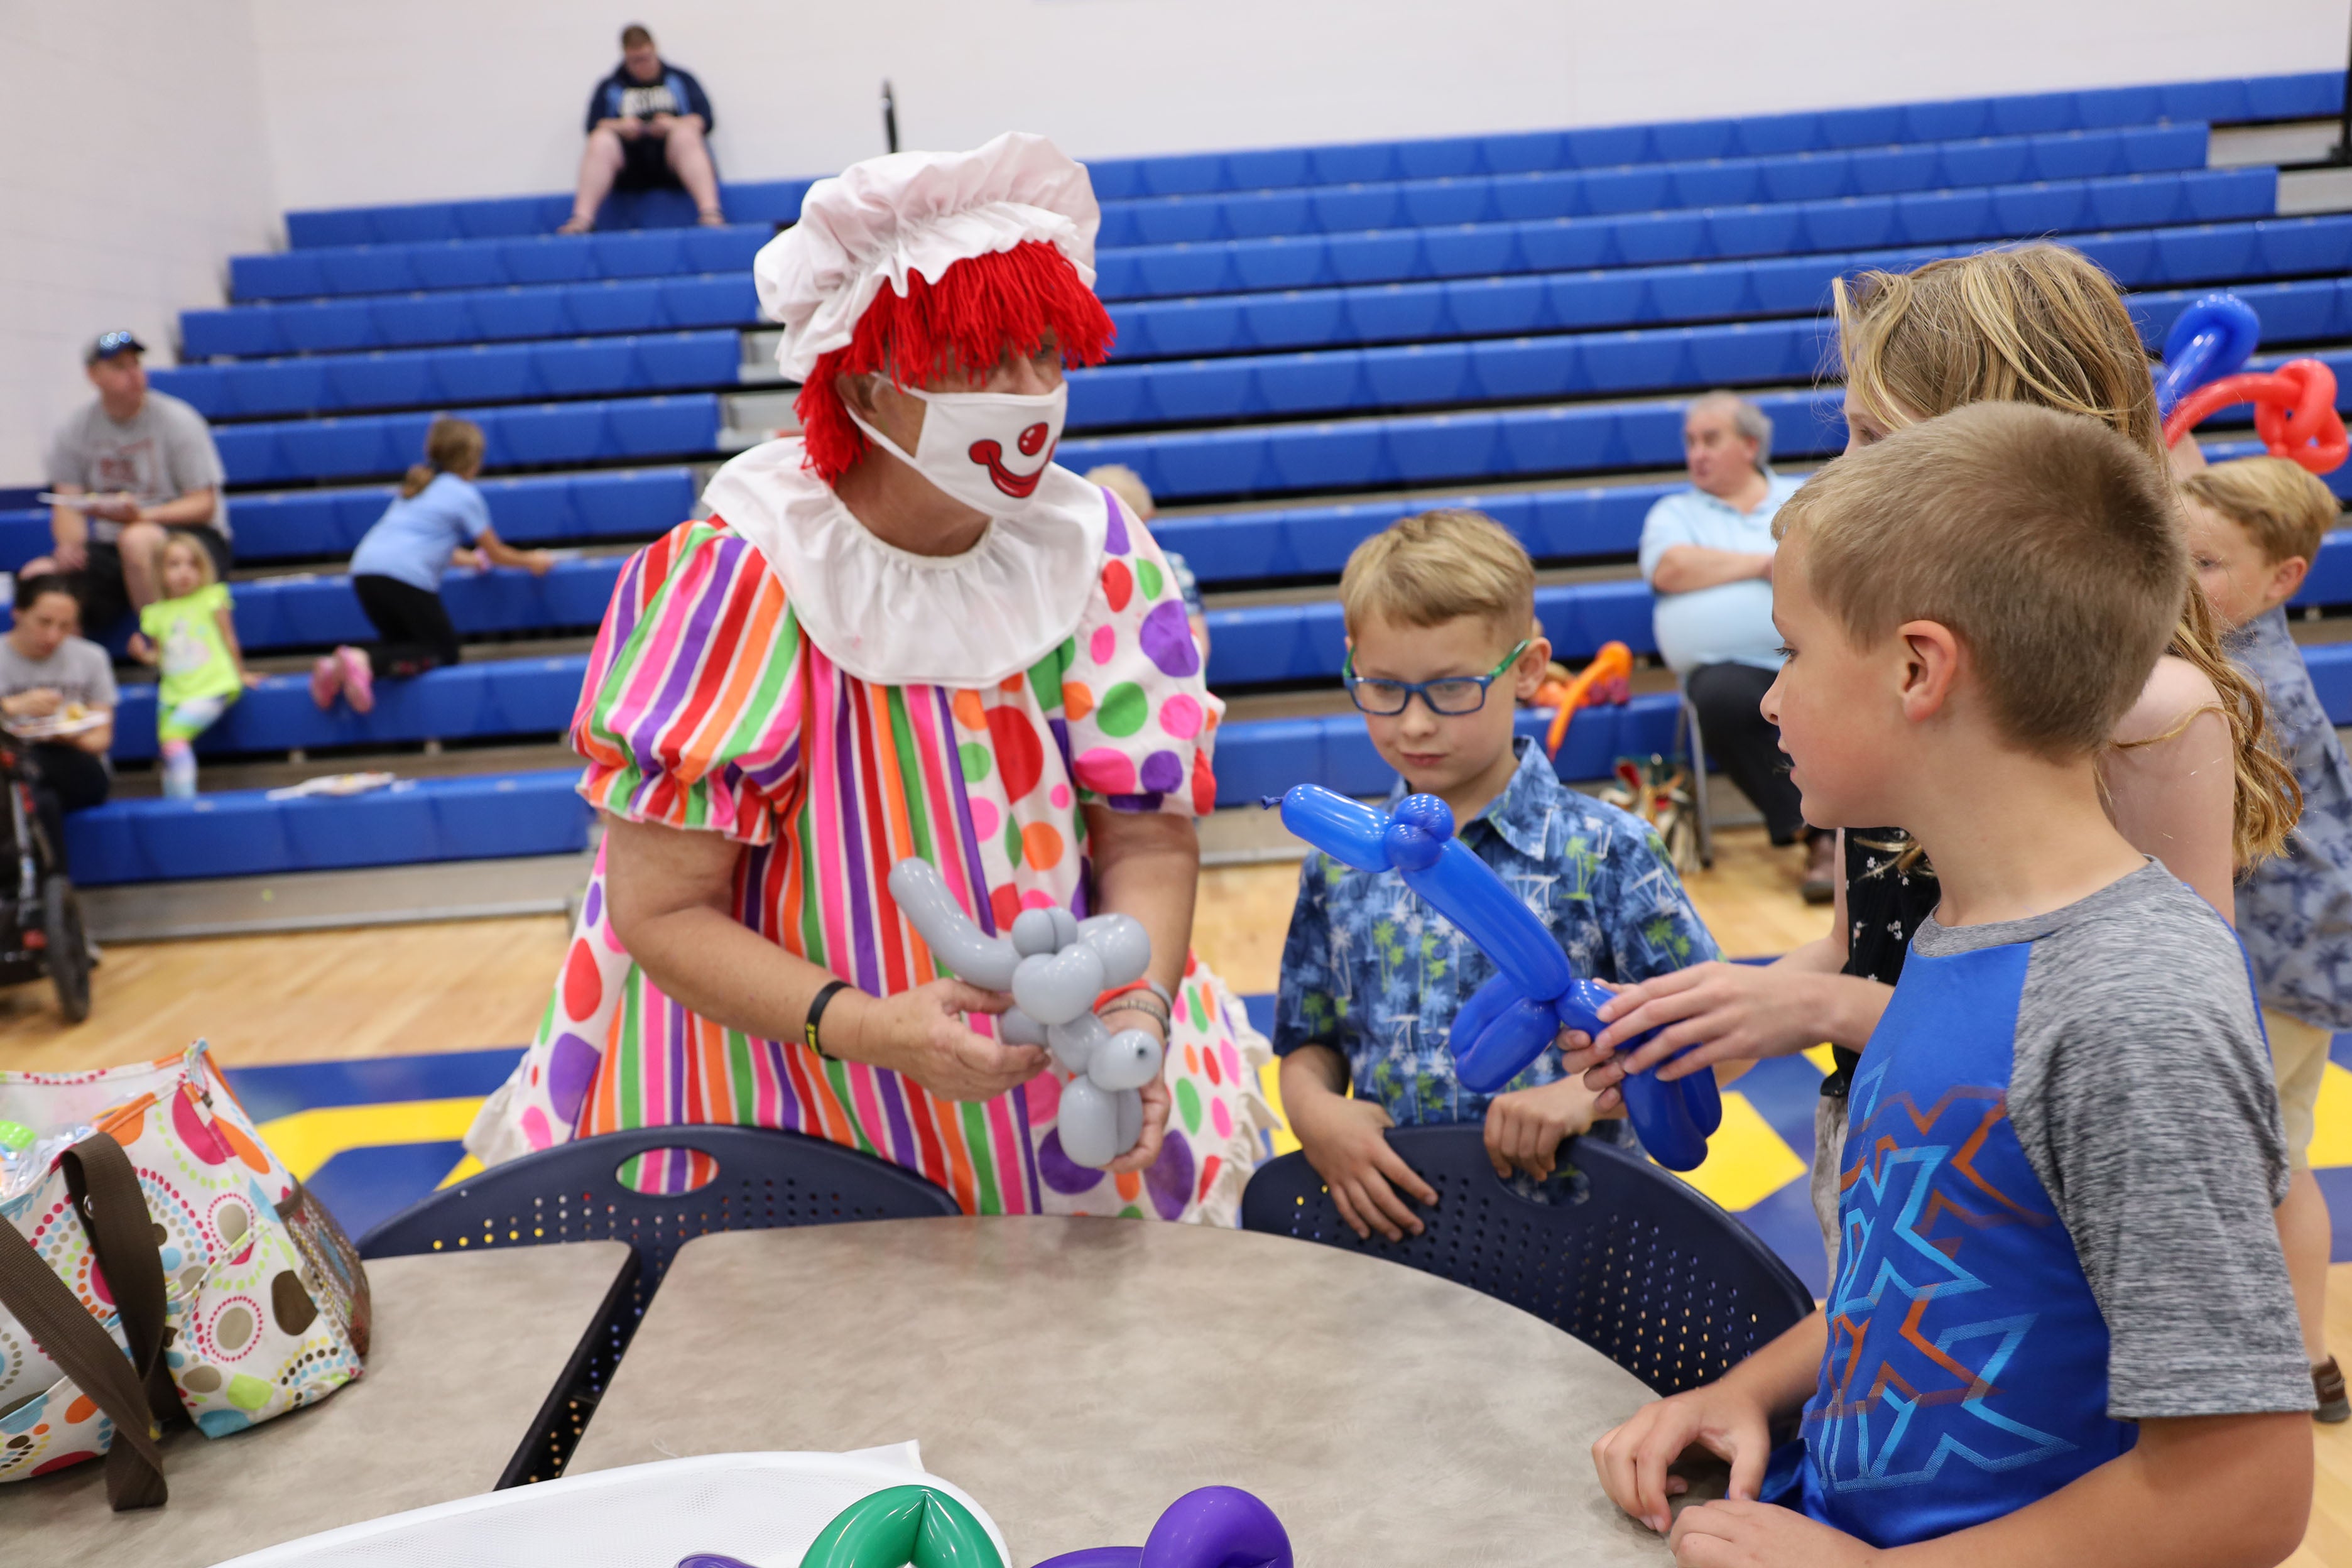 clowns blow up balloon hats for kids